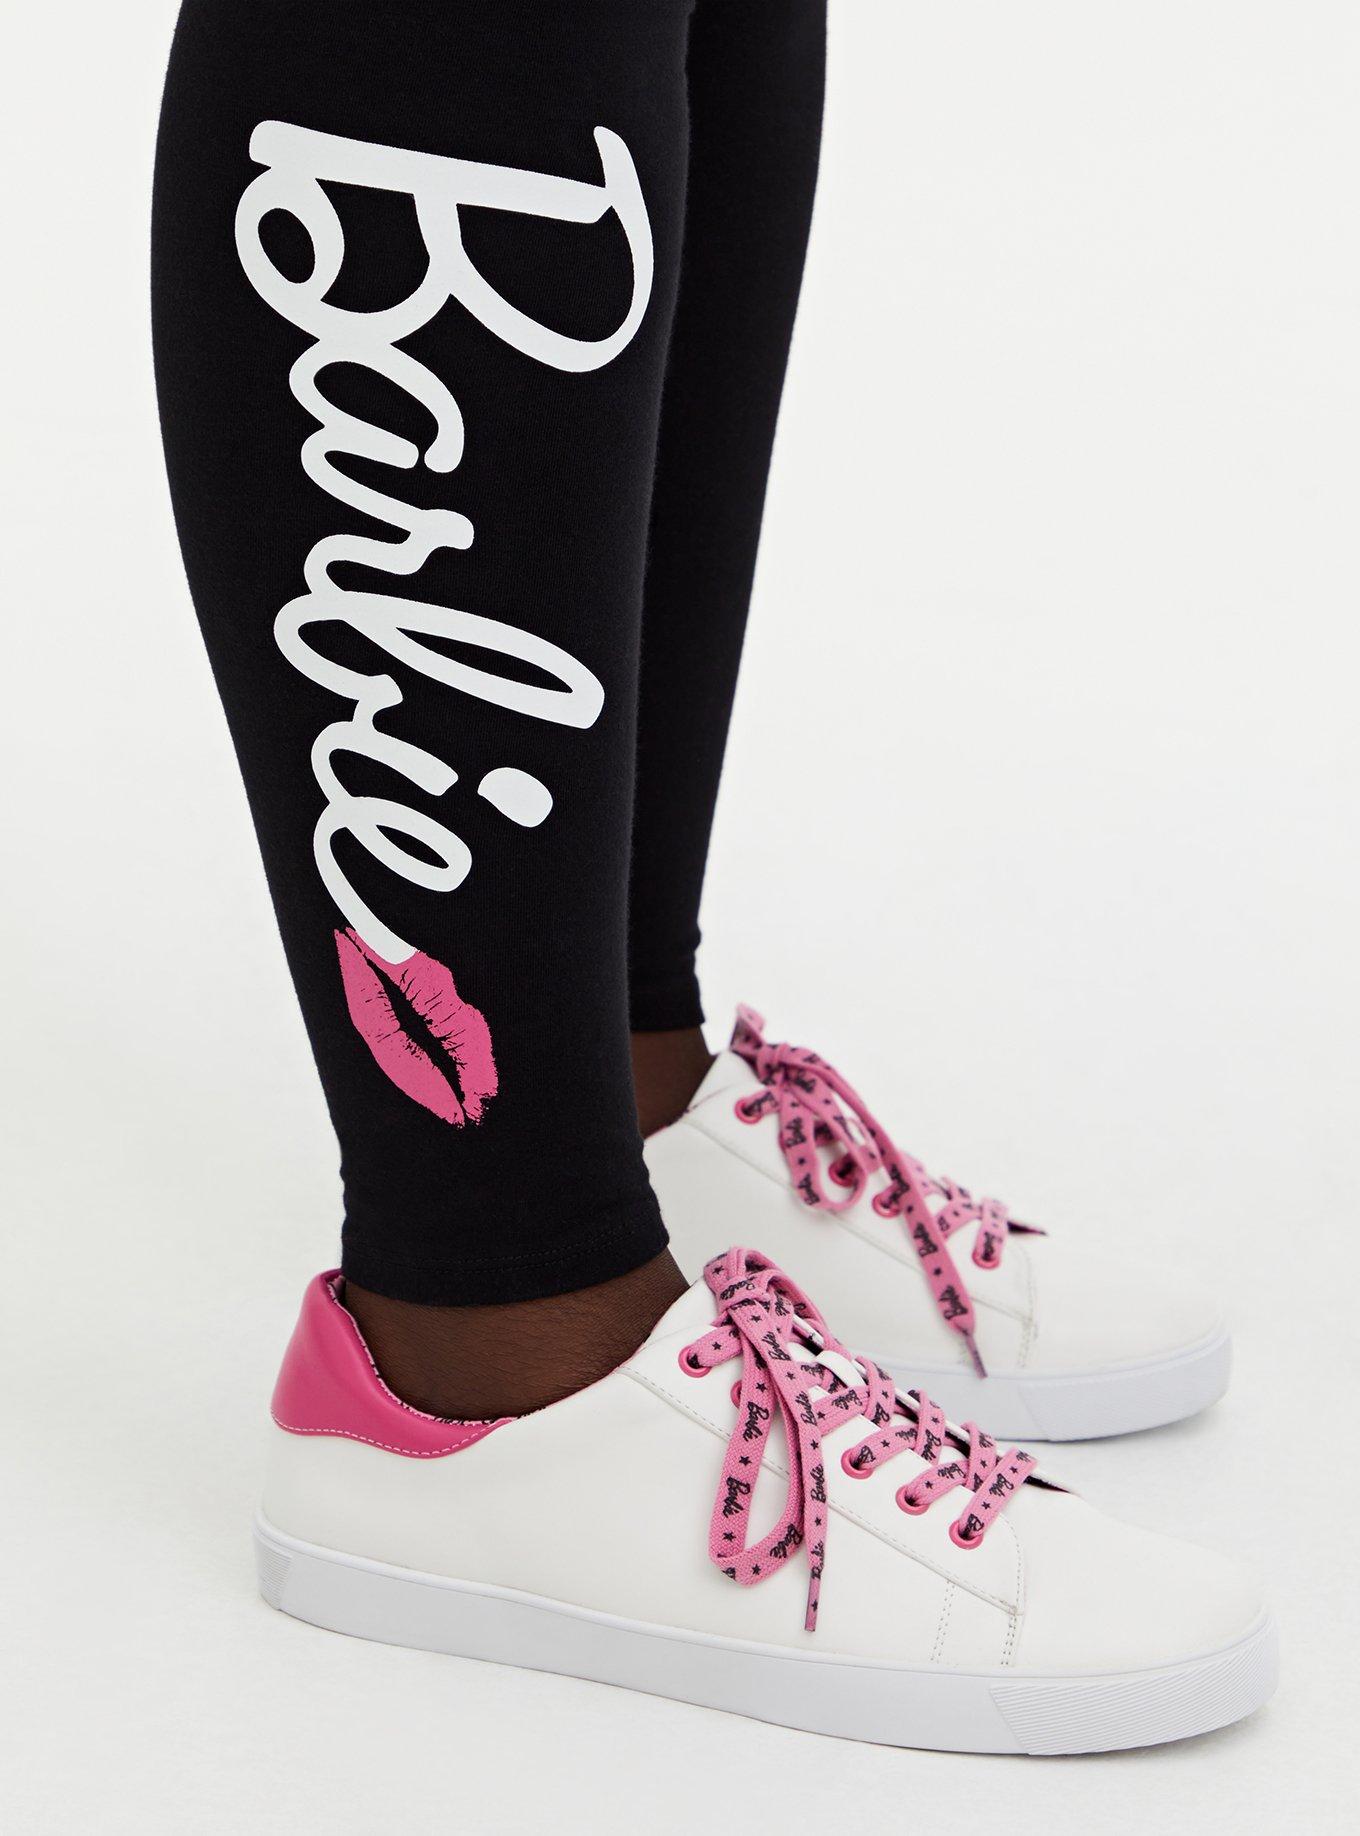 Barbie 80s Themed Neon Print Leggings (Plus Size) - 5257228_9828